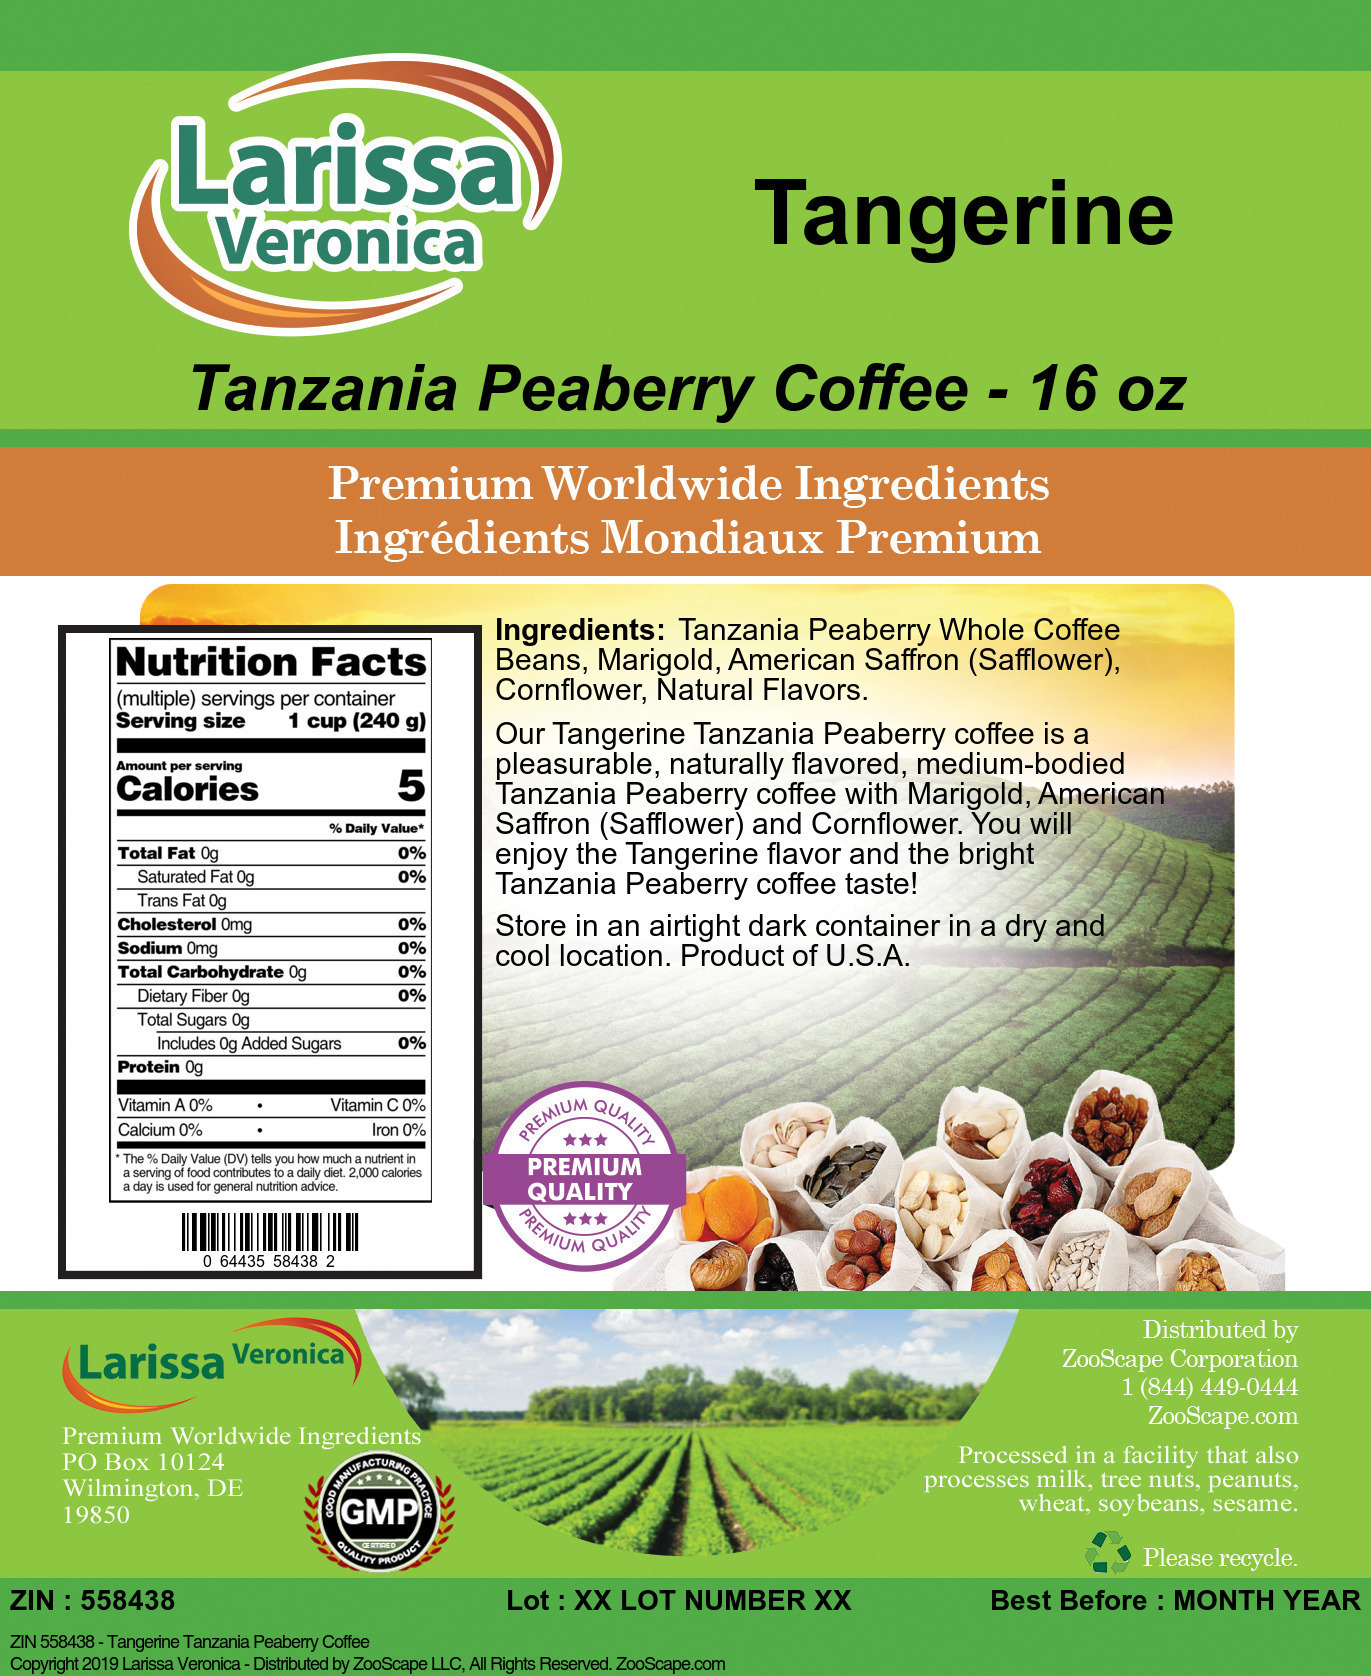 Tangerine Tanzania Peaberry Coffee - Label